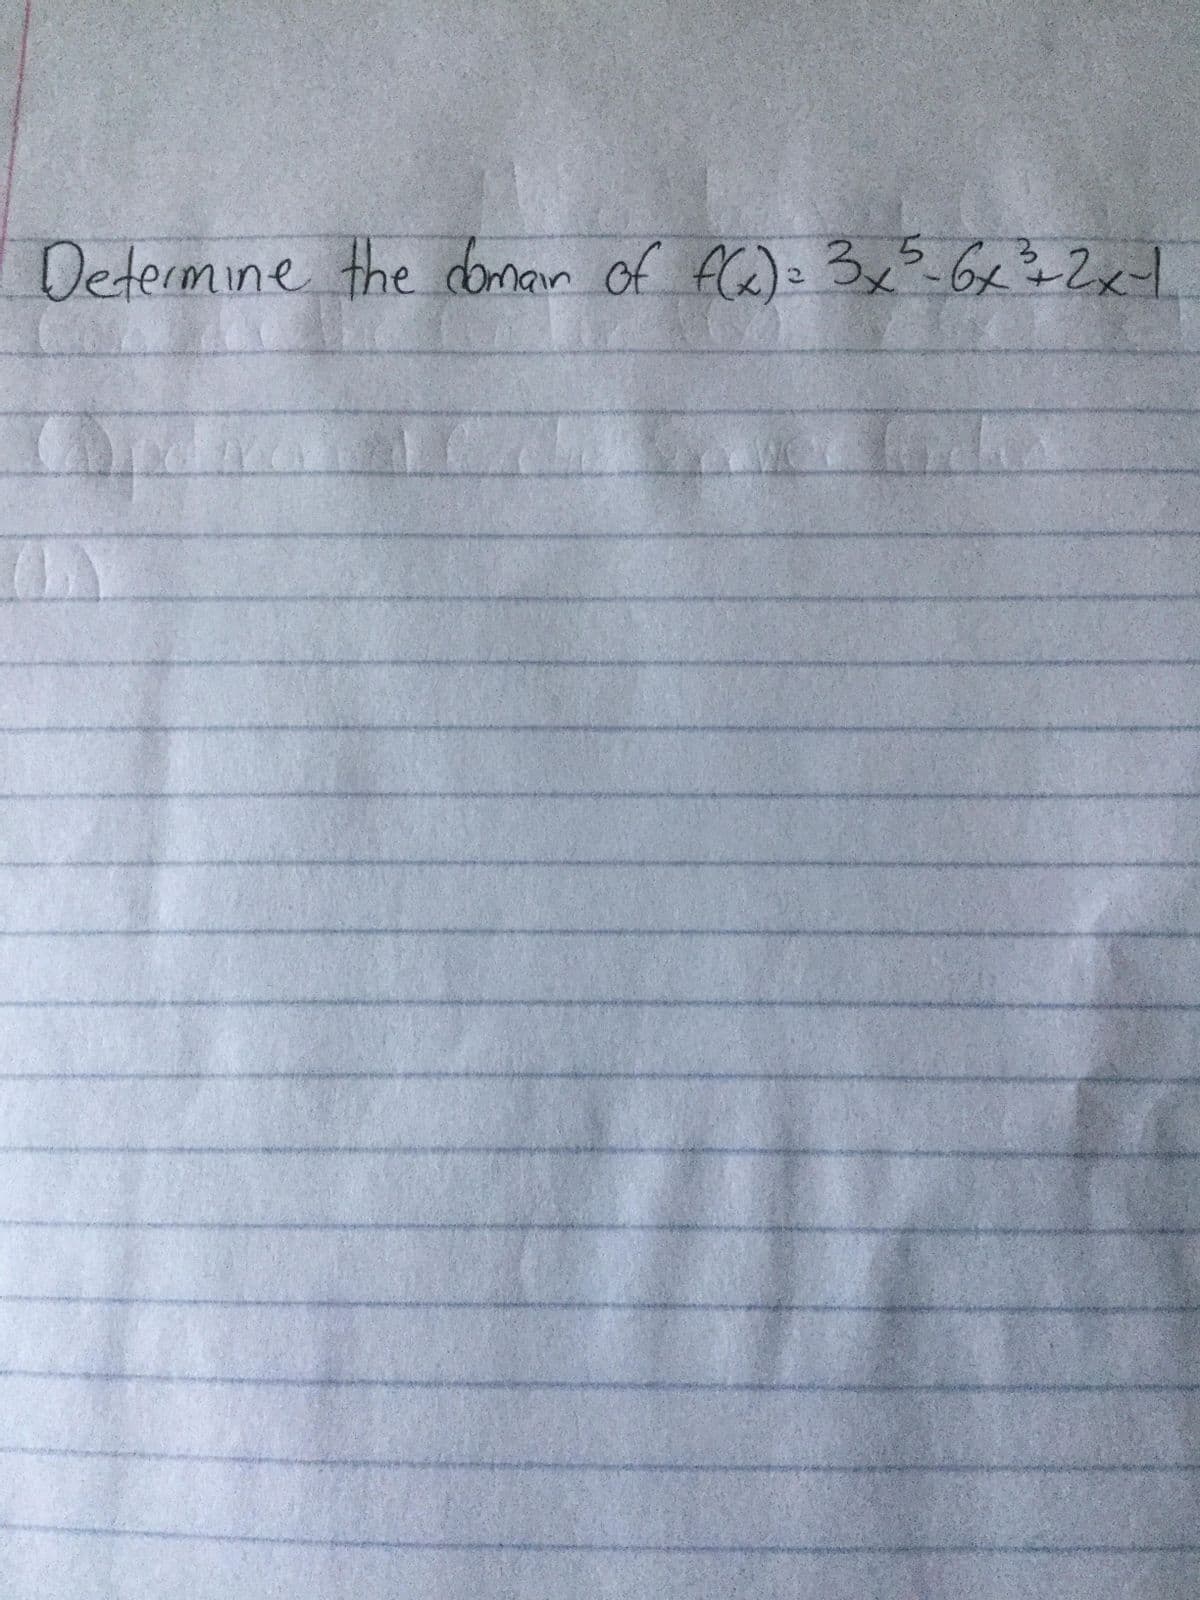 Determine the doman of fCe)= 35-6x32x1
